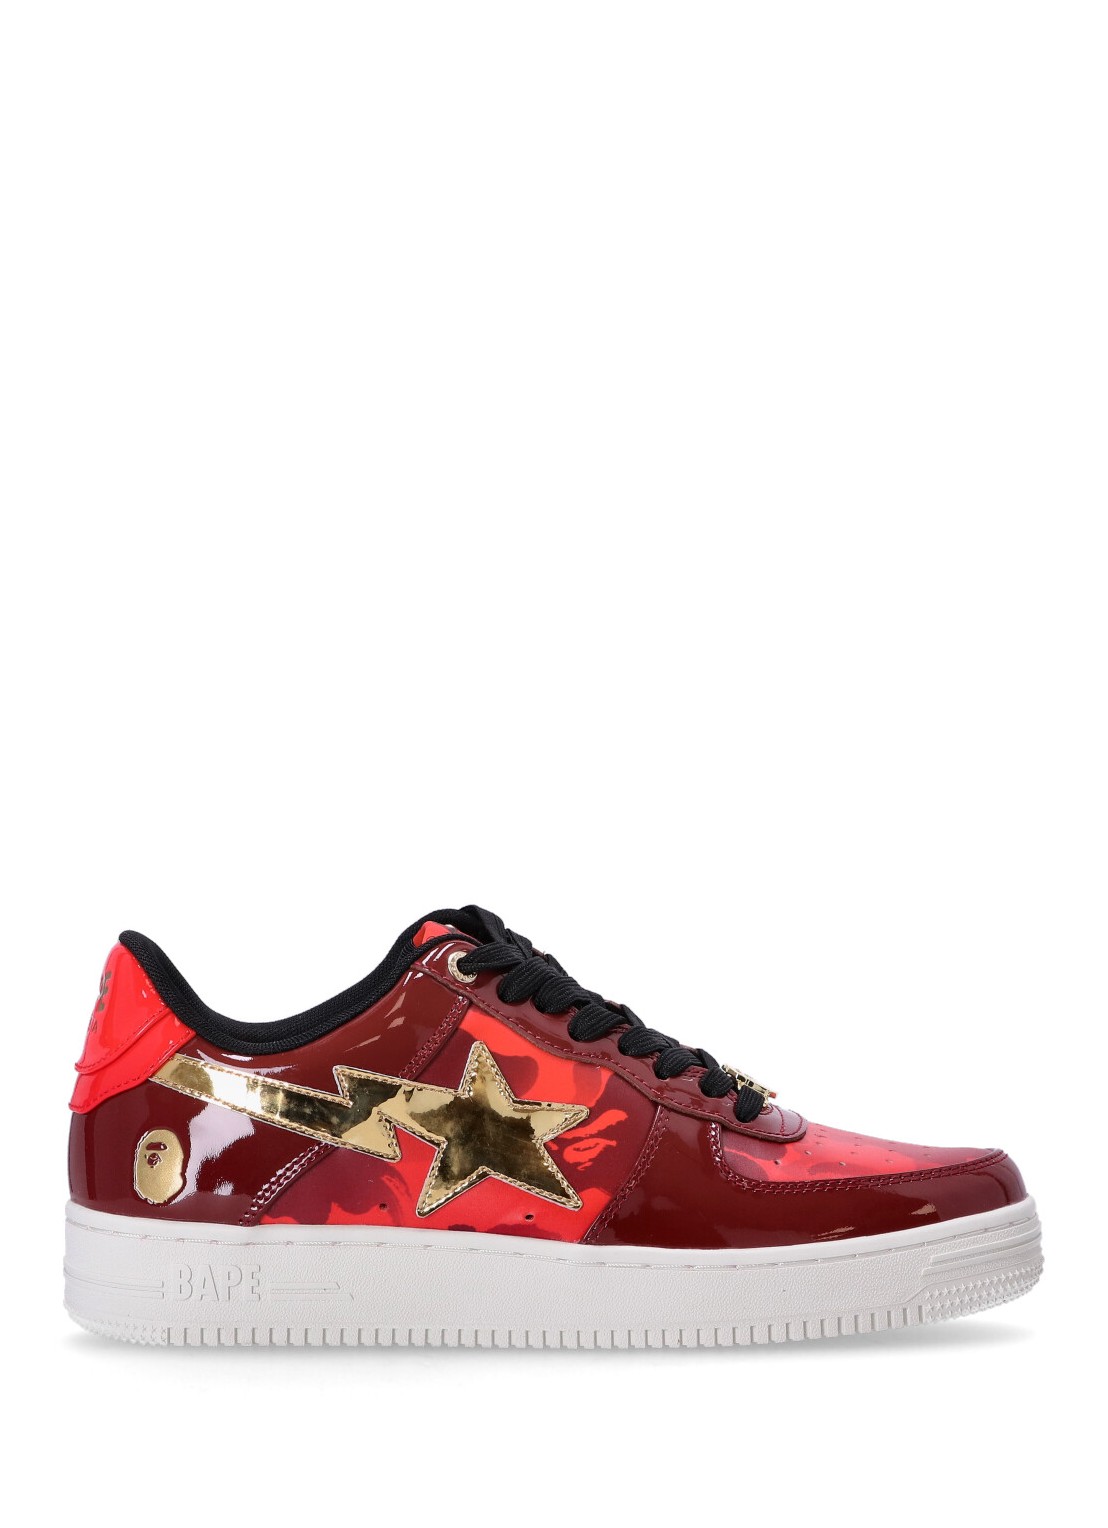 Sneaker bape bape stat cny project mens - 001fwj221003i red talla 43
 